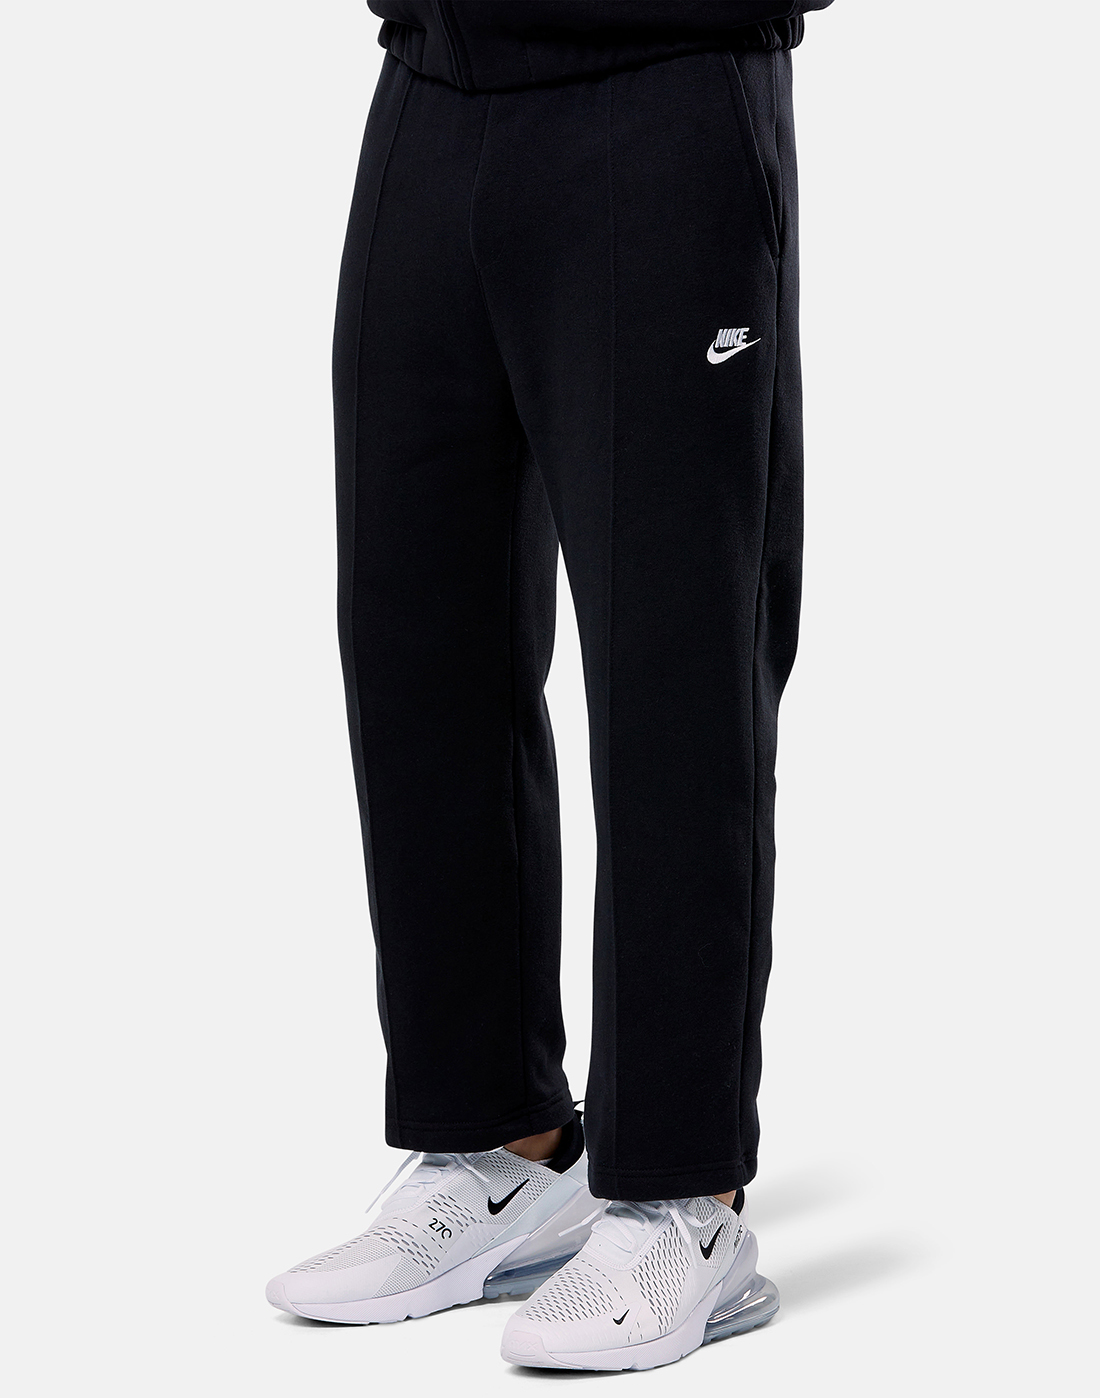 Black grey blue Casual Wear Mens Nike Lower Size M l xl xxl